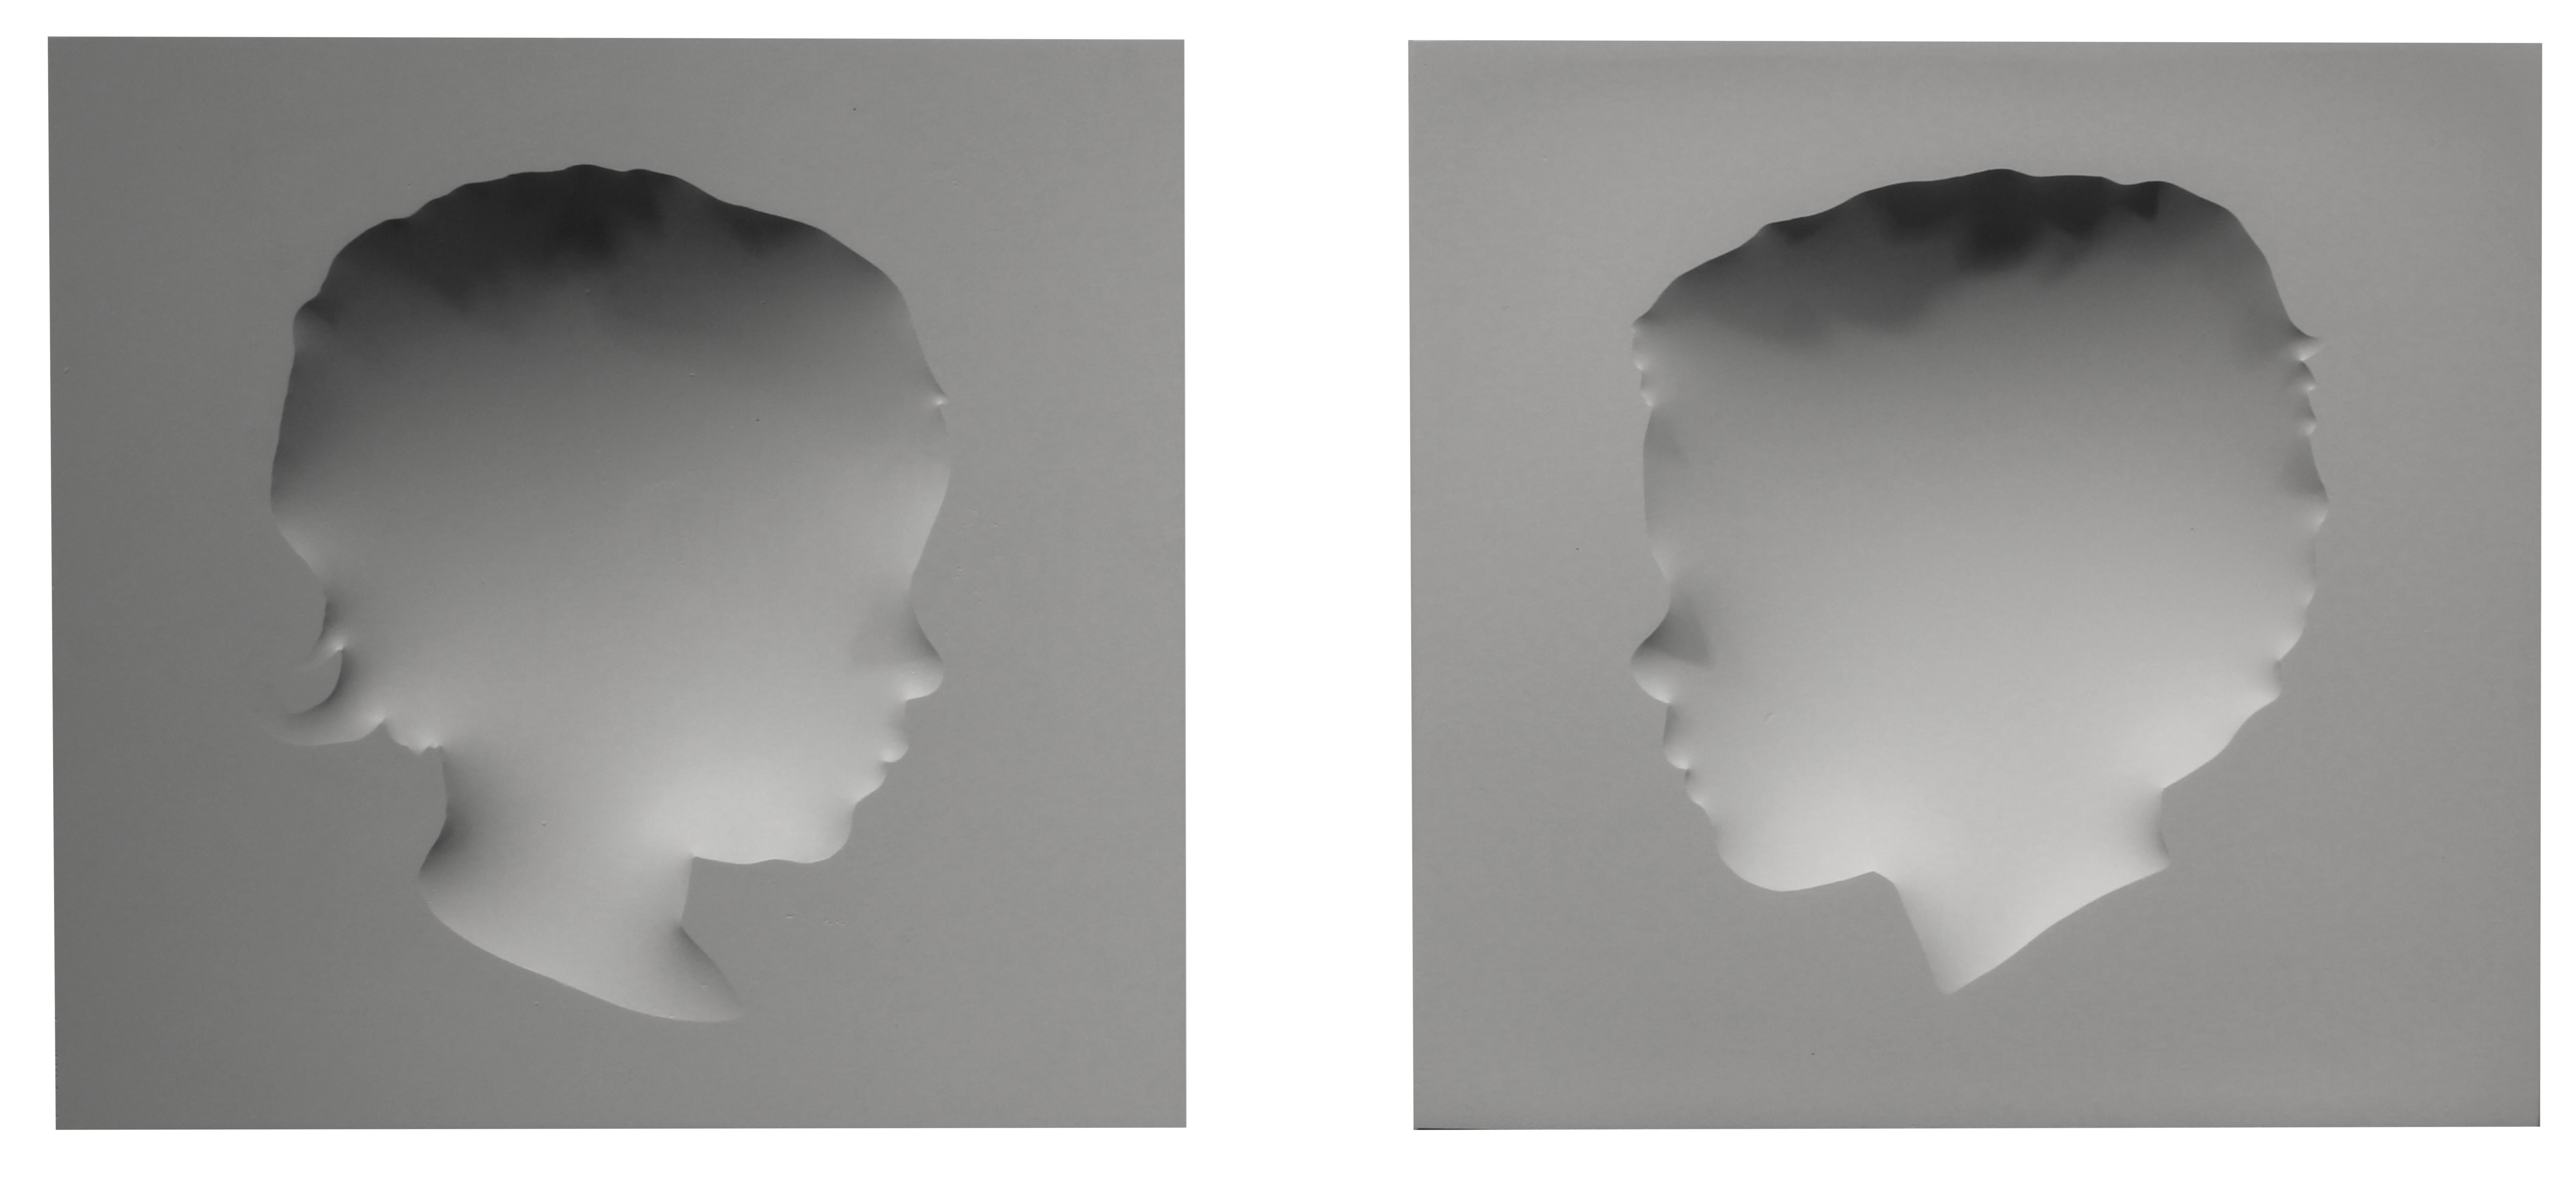 Custom Silhouette Portraiture - Sculpture by Ben Watkins